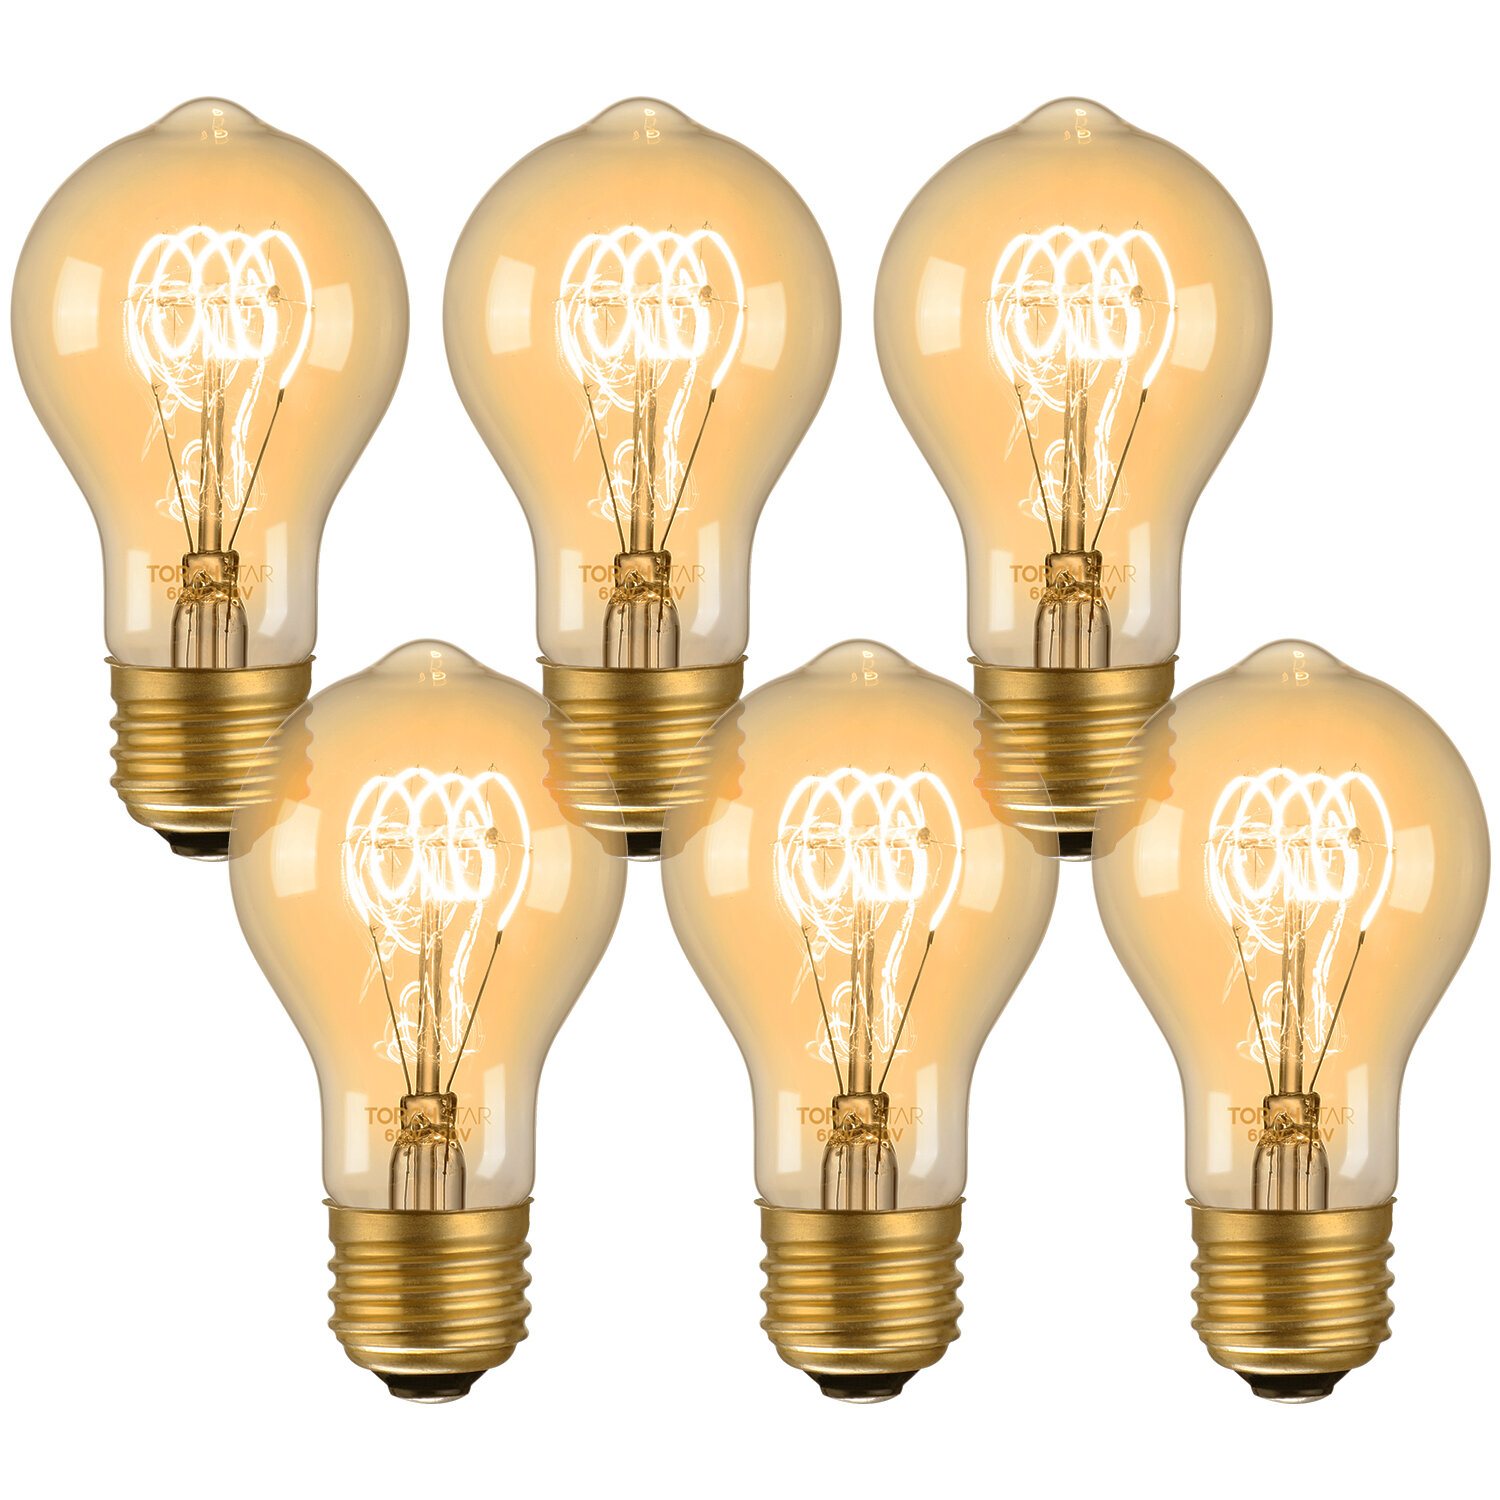 Edison Vintage Light Bulbs 60/40W Old Fashioned Retro Style Filament Lamp Bulb